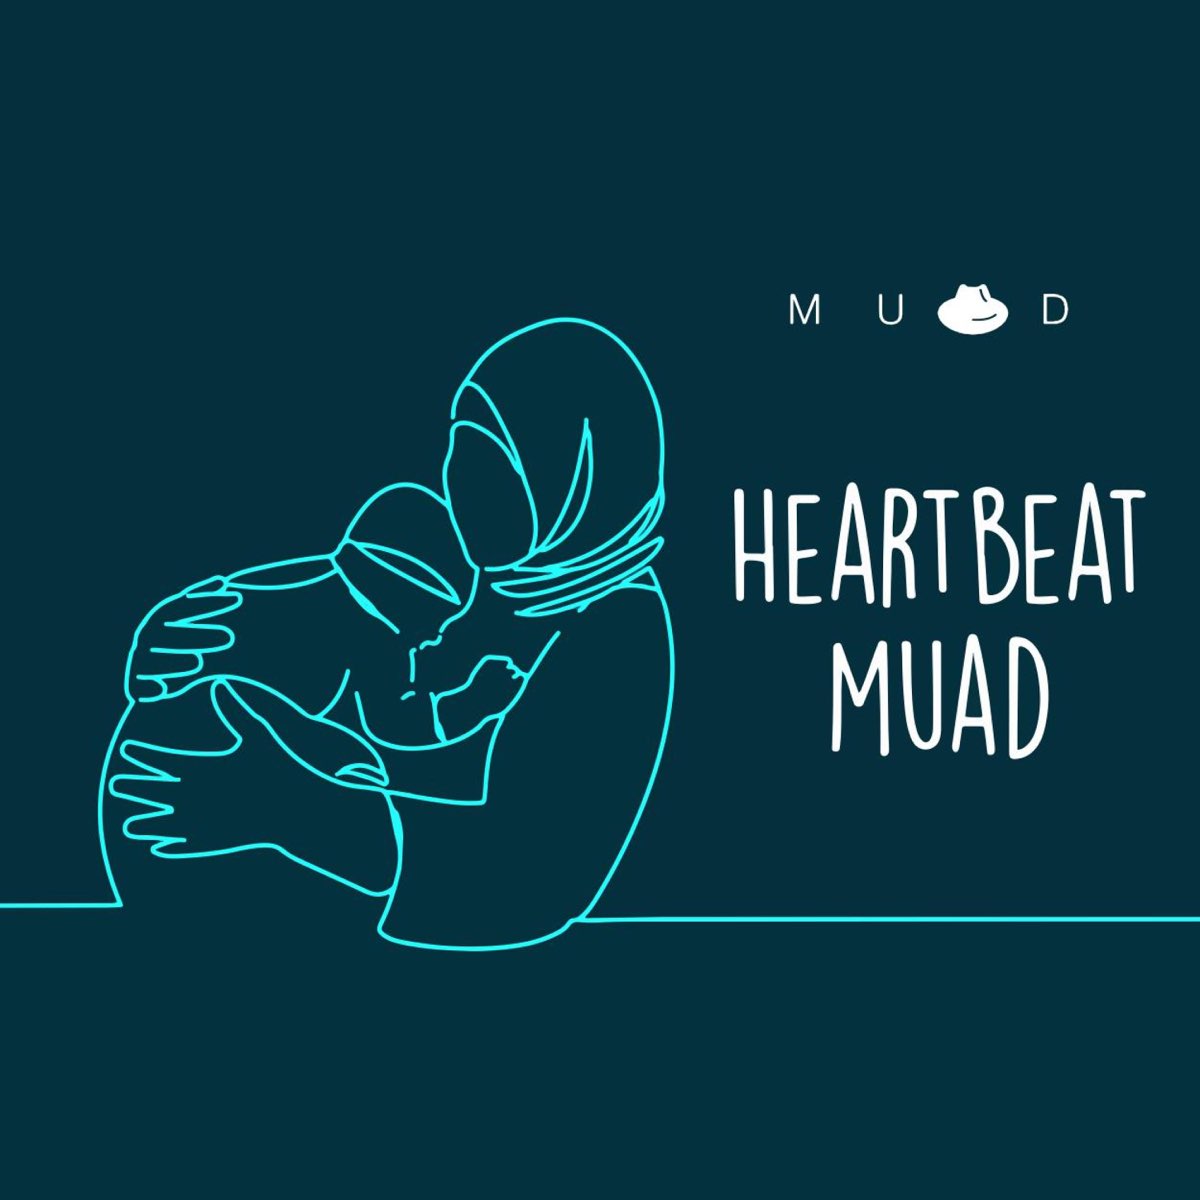 Heartbeat mp3. Muad.